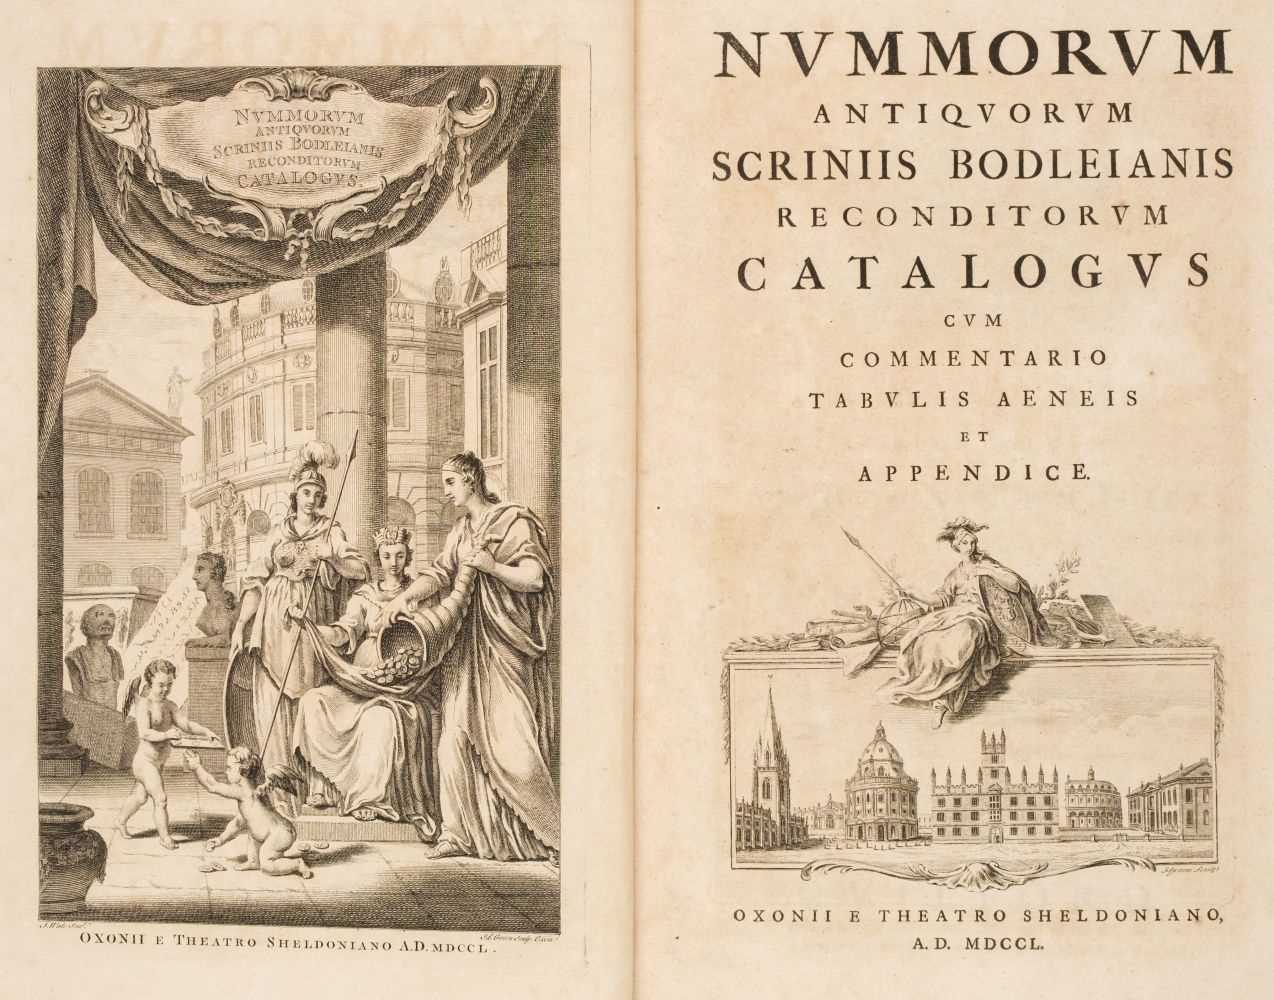 Lot 301 - Wise, Francis. Nummorum antiquorum scriniis Bodleianis, 1750